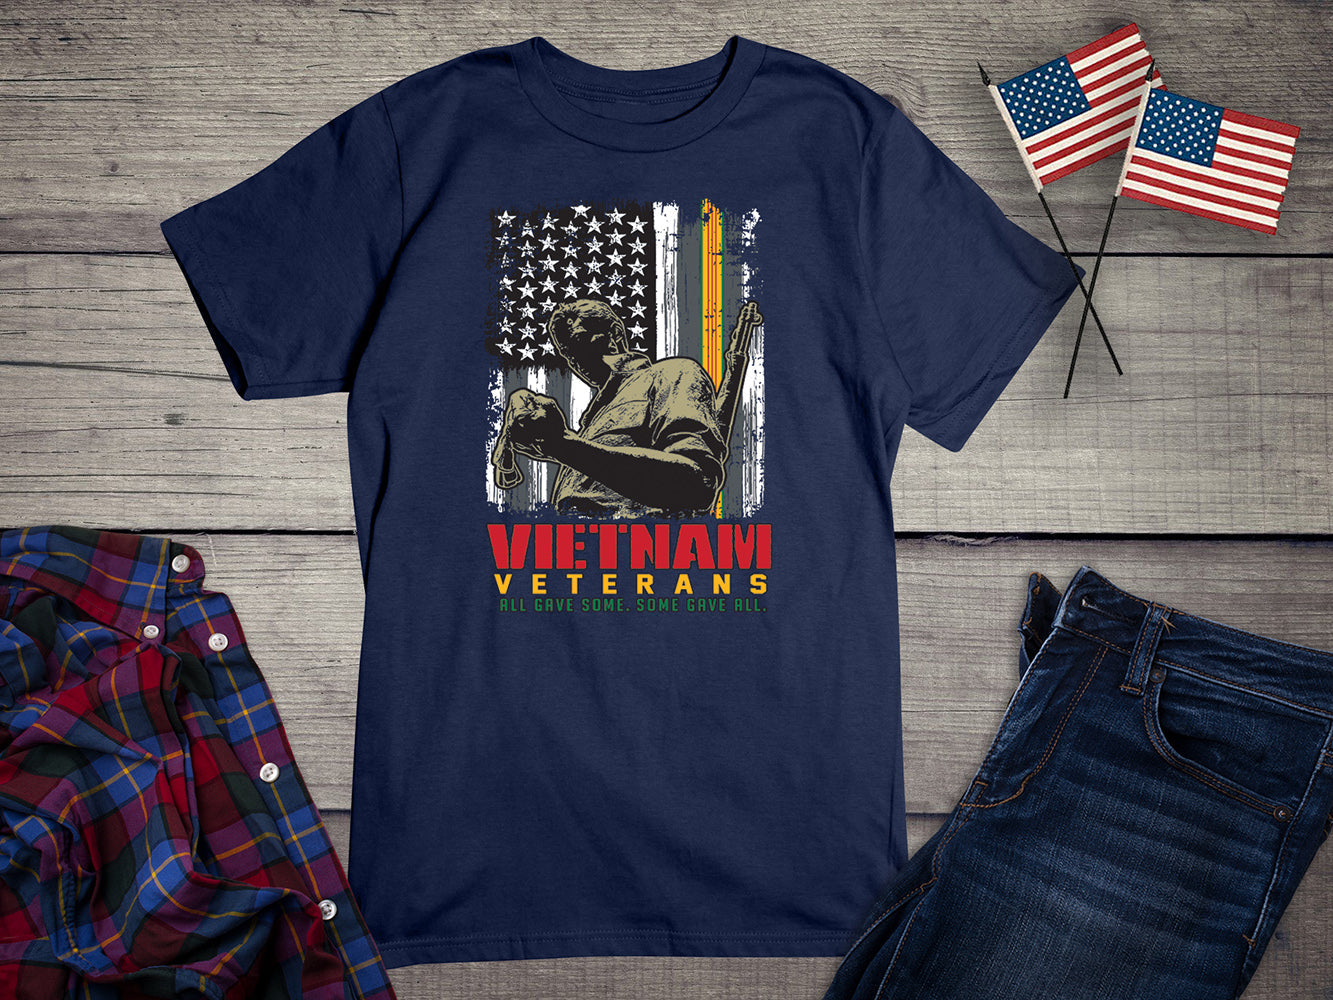 Vietnam Veterans Flag T-shirt